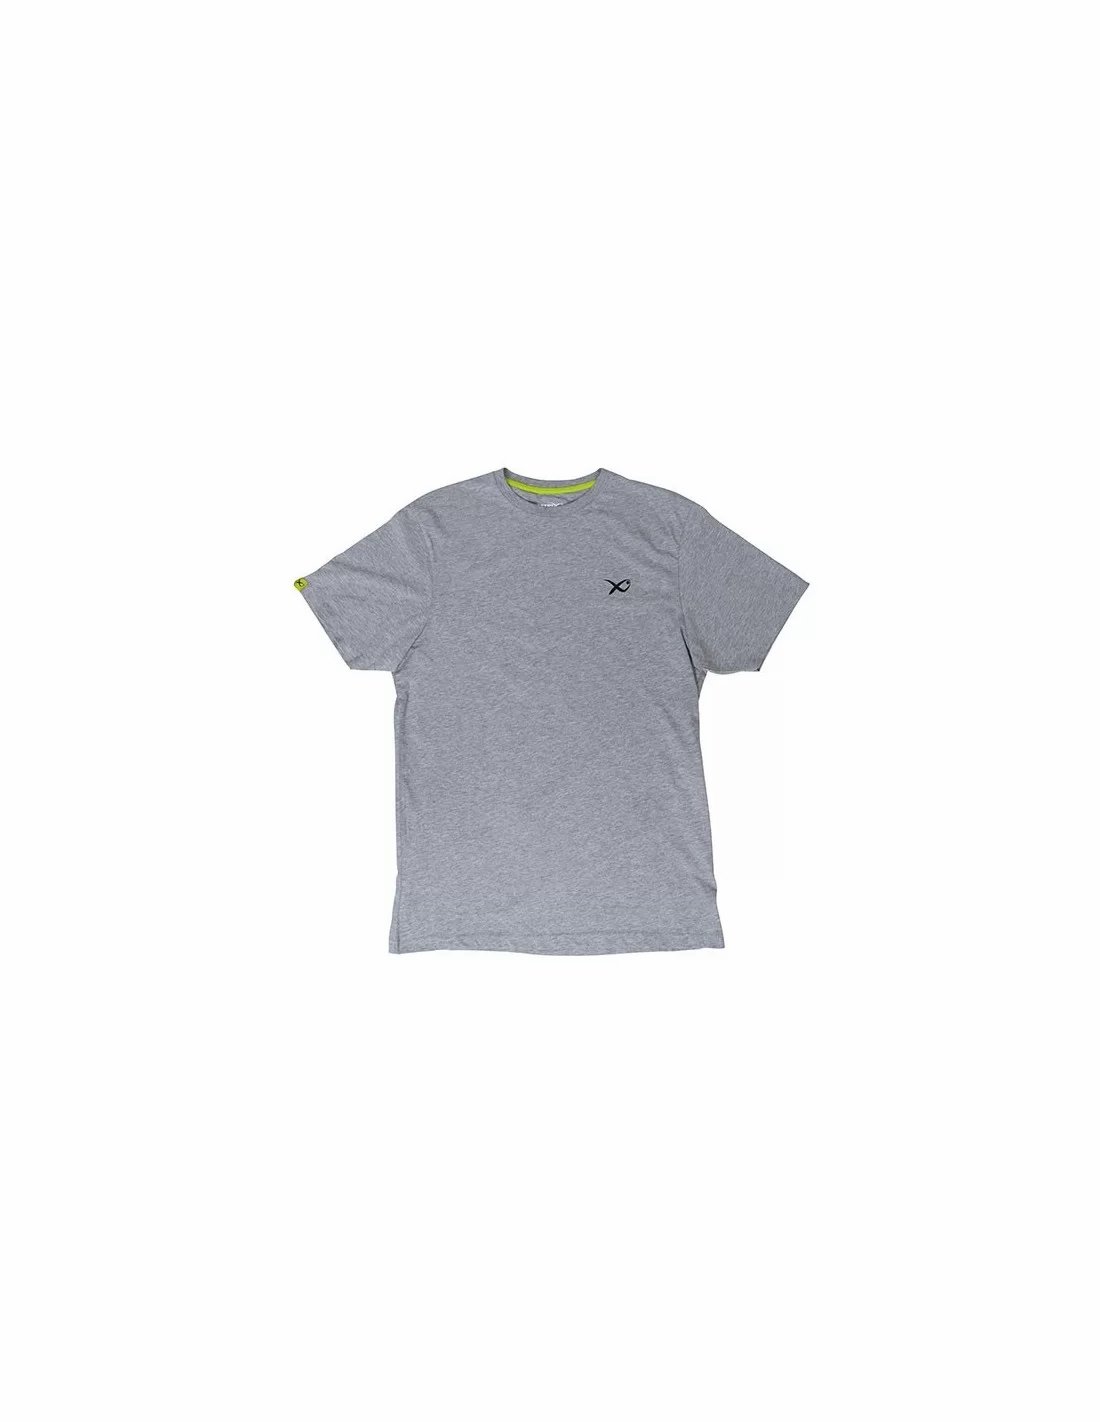 Matrix Matrix Minimal Light Grey T-Shirt тениска